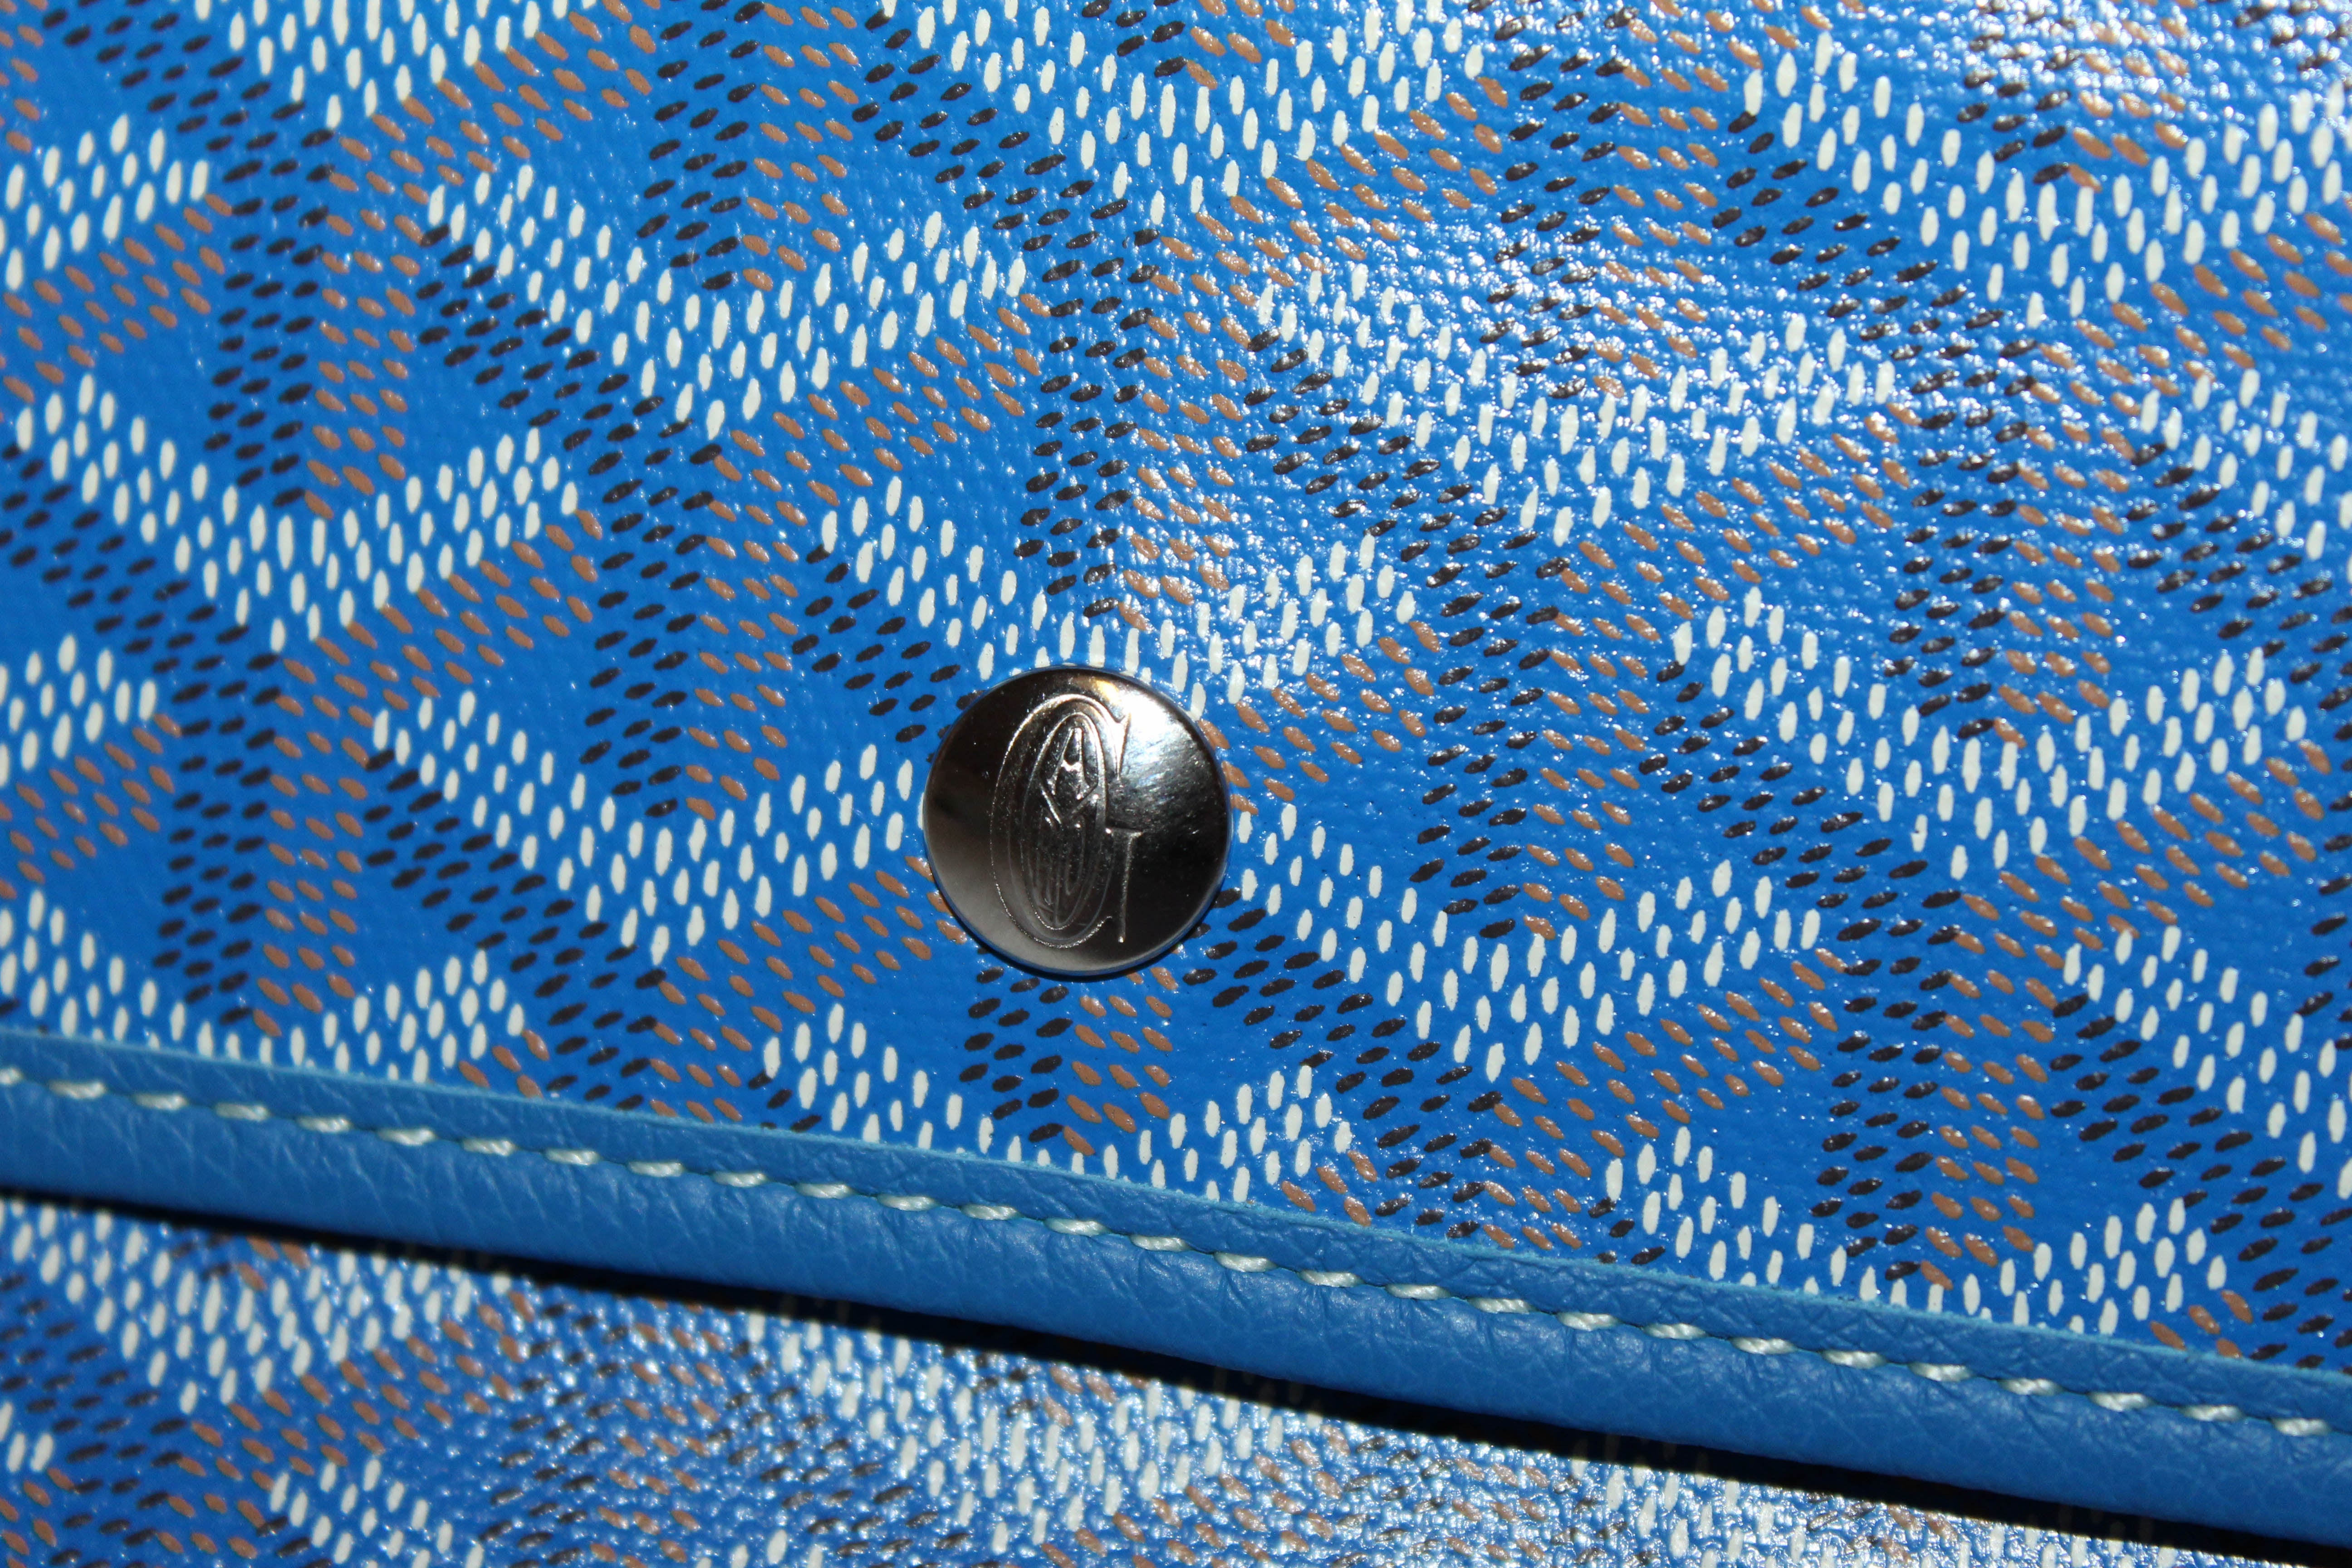 Blue Goyard Pattern